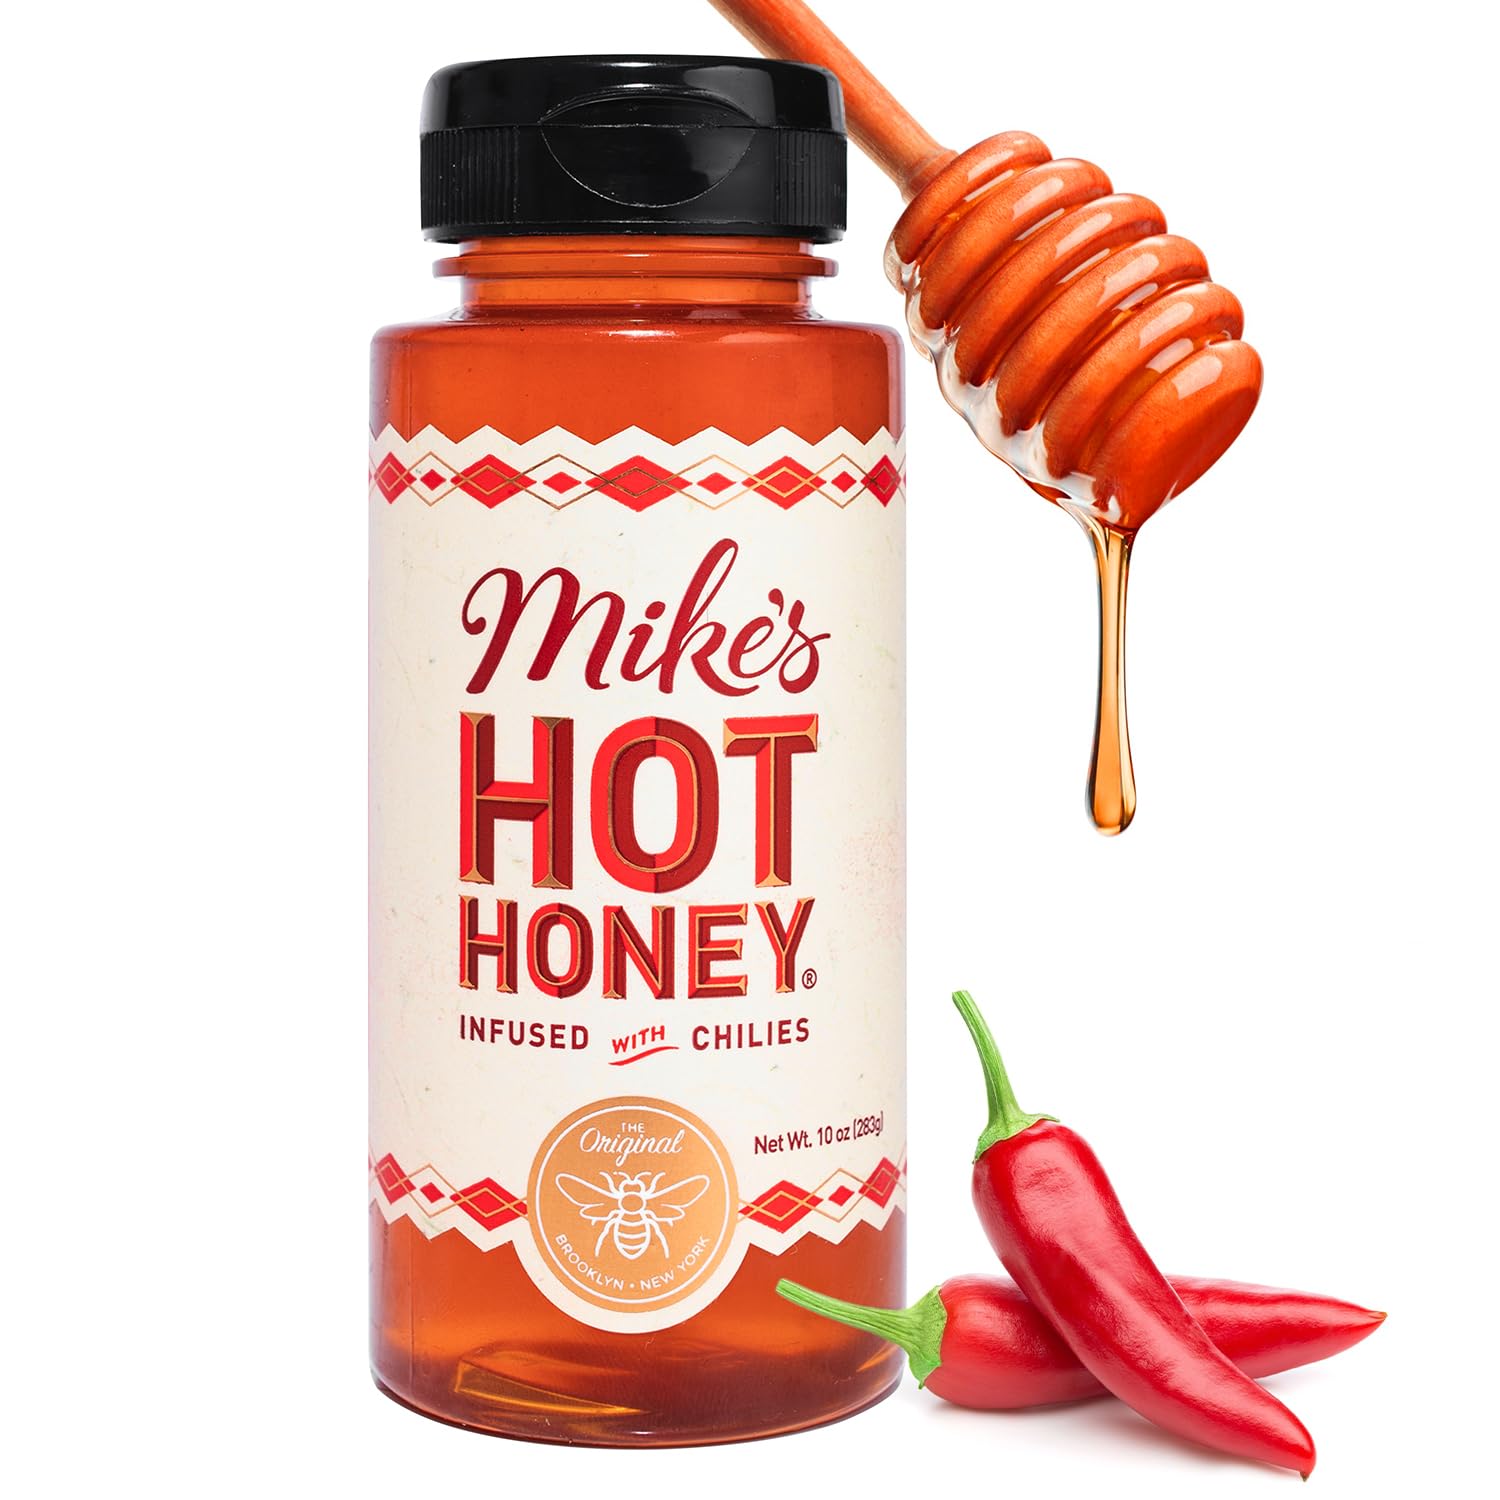 Mike’s Hot Honey, America’s #1 Brand of Hot Honey